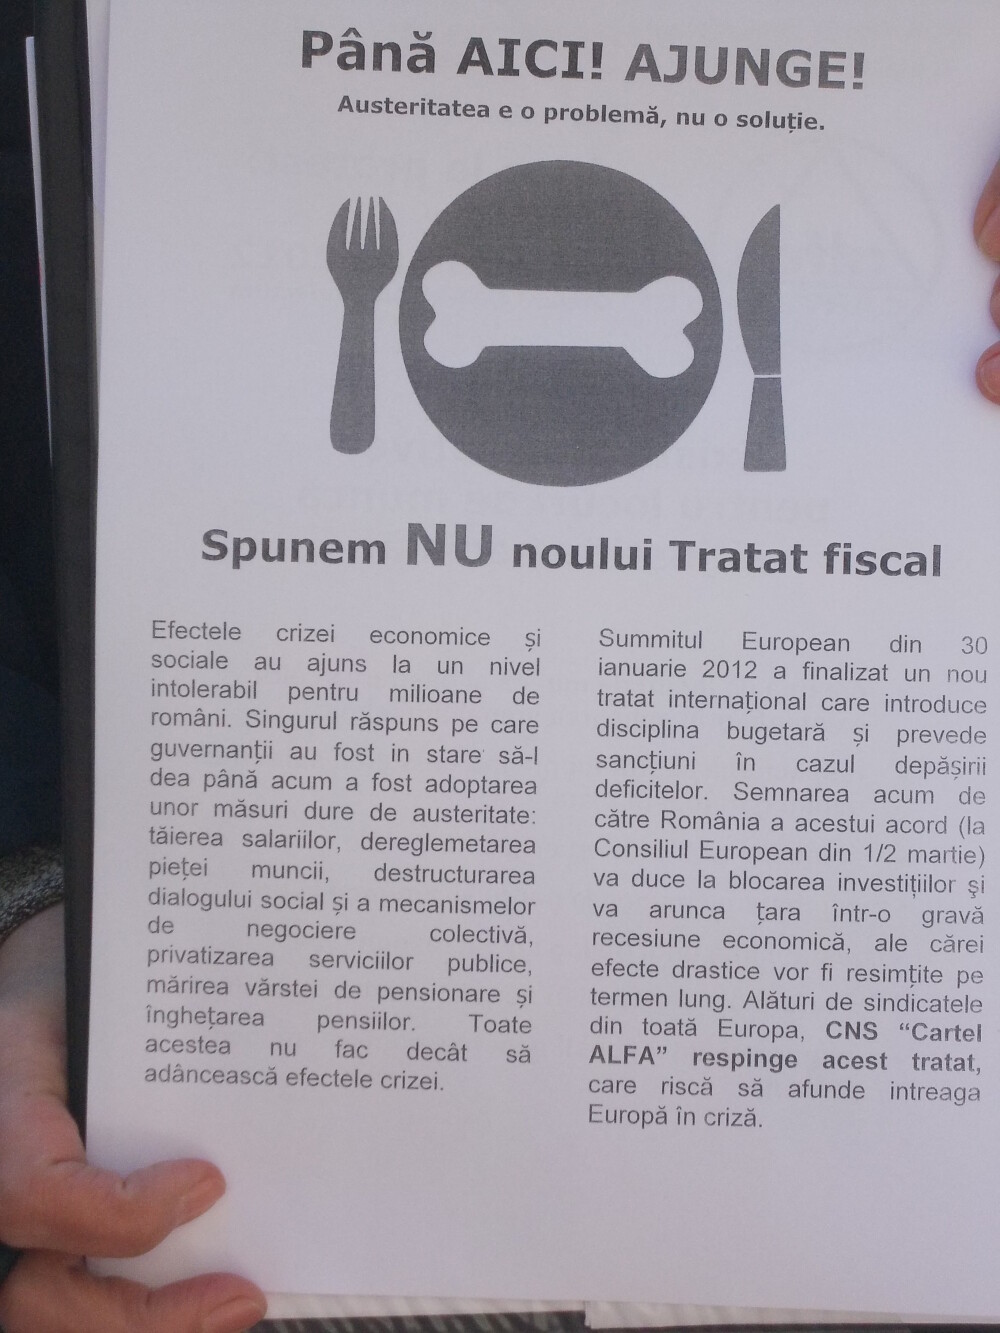 Protestul Cartel Alfa organizat la nivel national a strans o mana de oameni la Timisoara - Imaginea 4